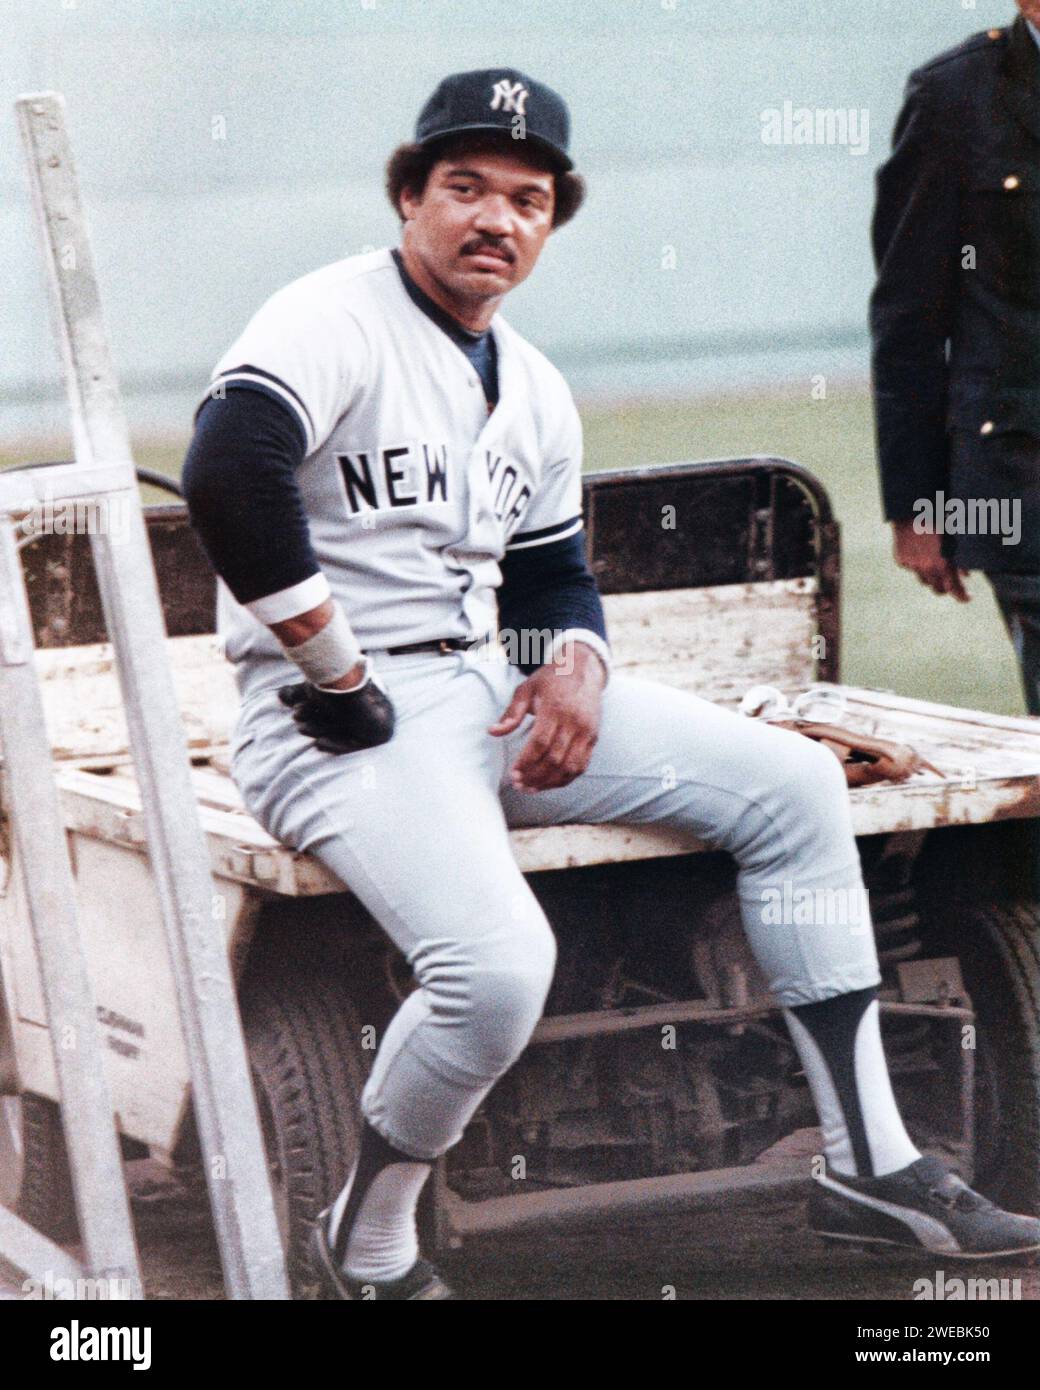 Reggie Jackson, Yankees de New York, Fenway Park, Boston, Massachusetts, 17 juin 1977. Banque D'Images